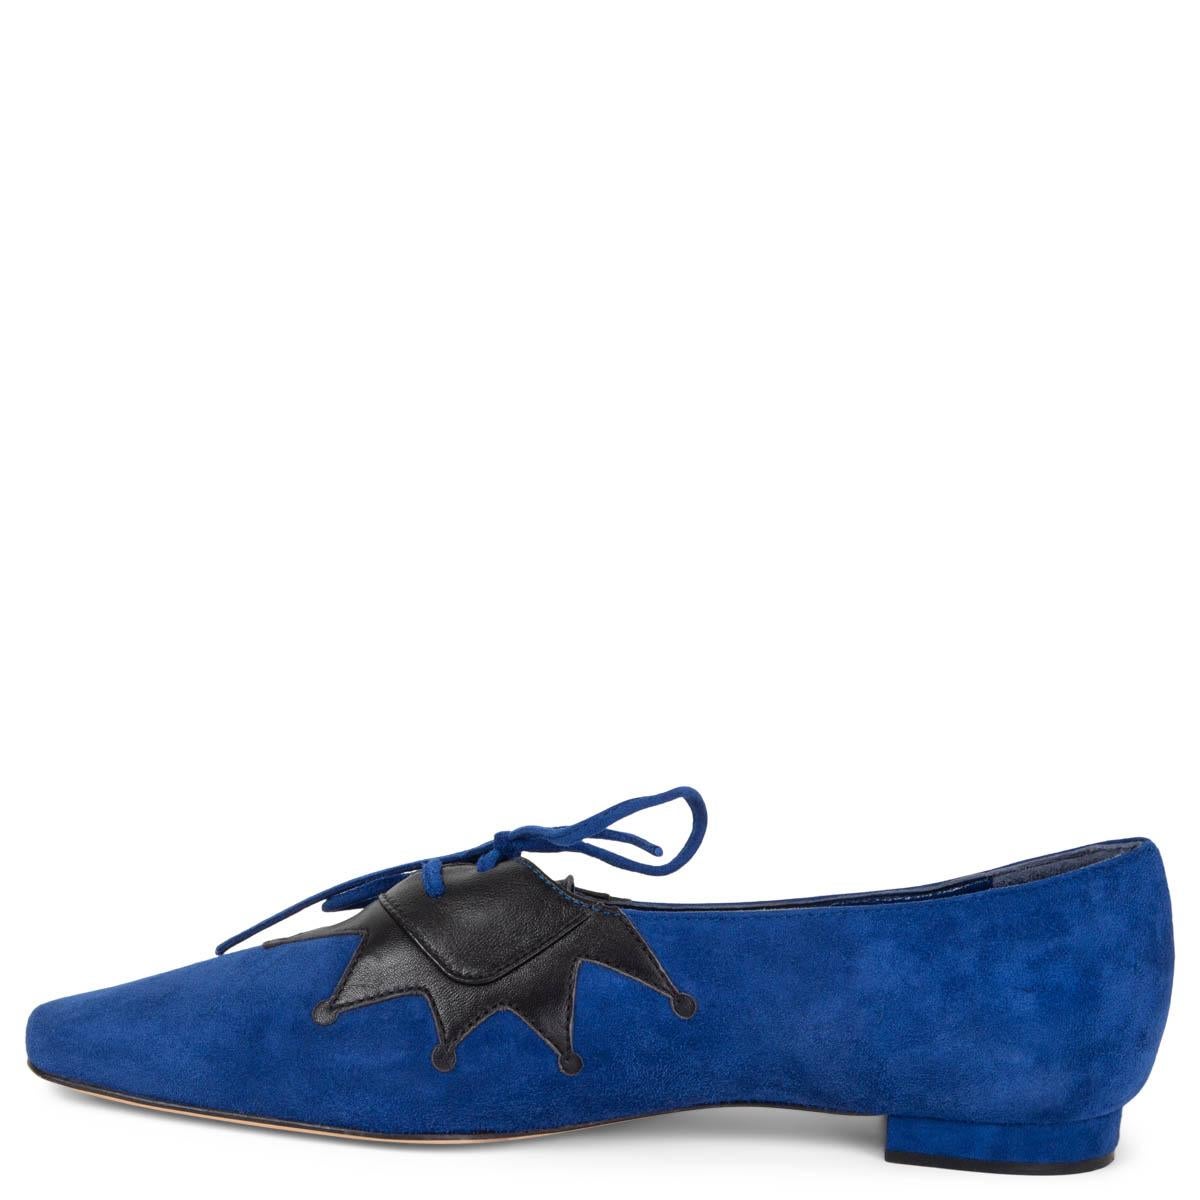 electric blue flat shoes